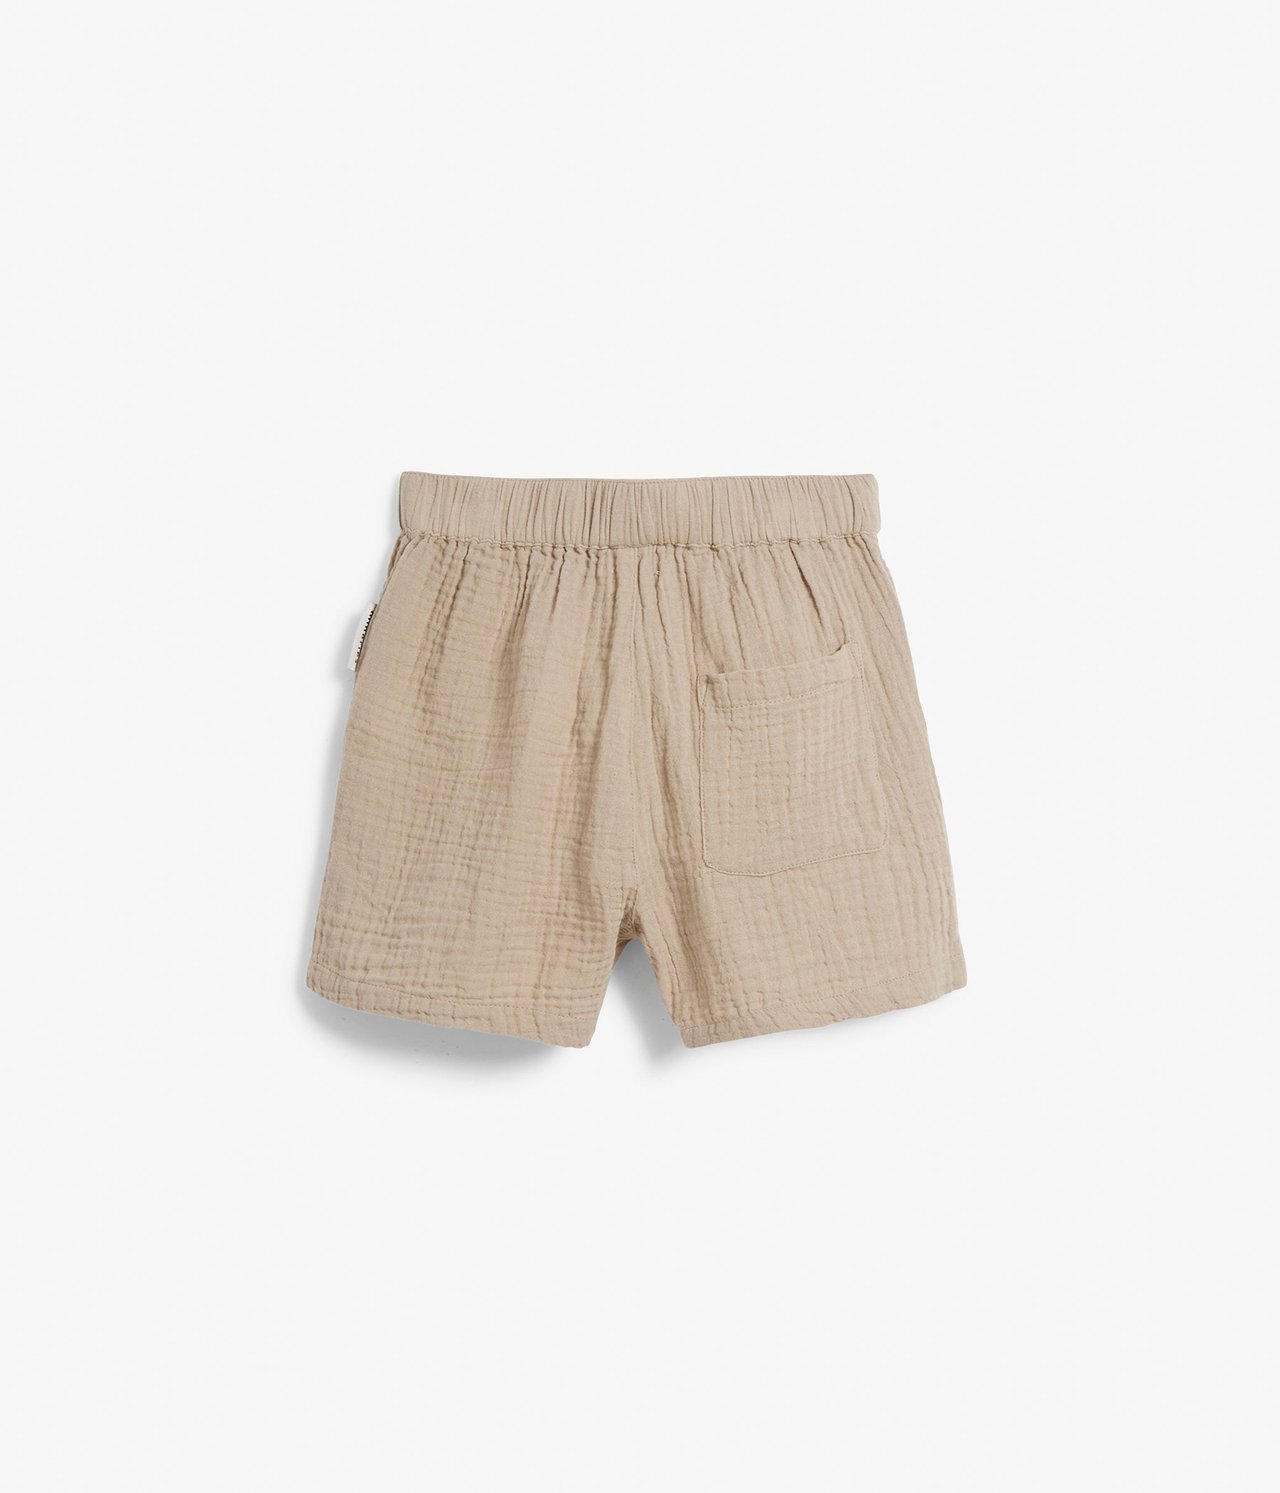 Vevd shorts Brun - null - 2